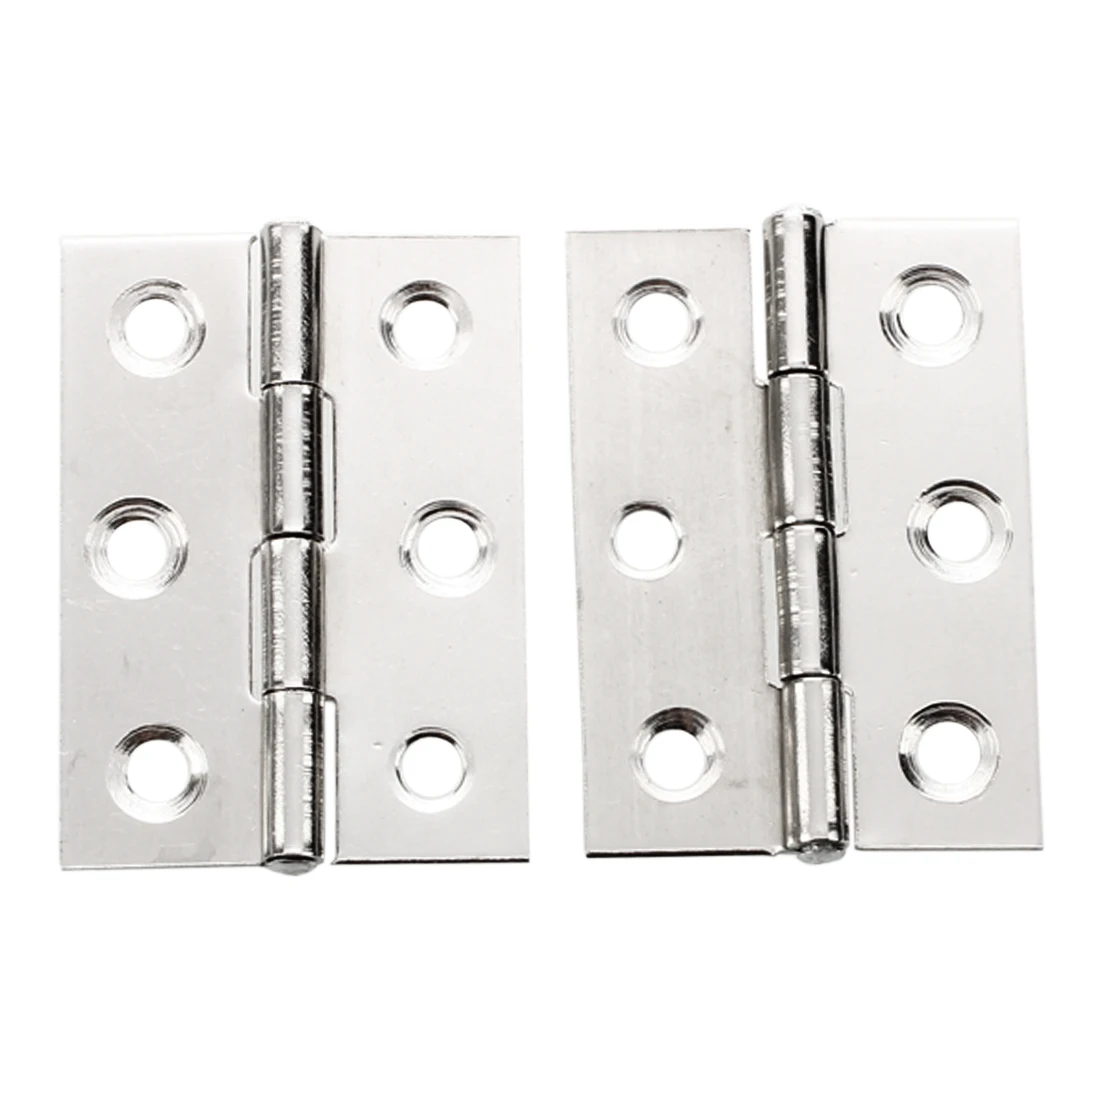 

2pcs Stainless Steel 2 Inch 4.4x3.1cm Cabinet Door Hinges Hardware